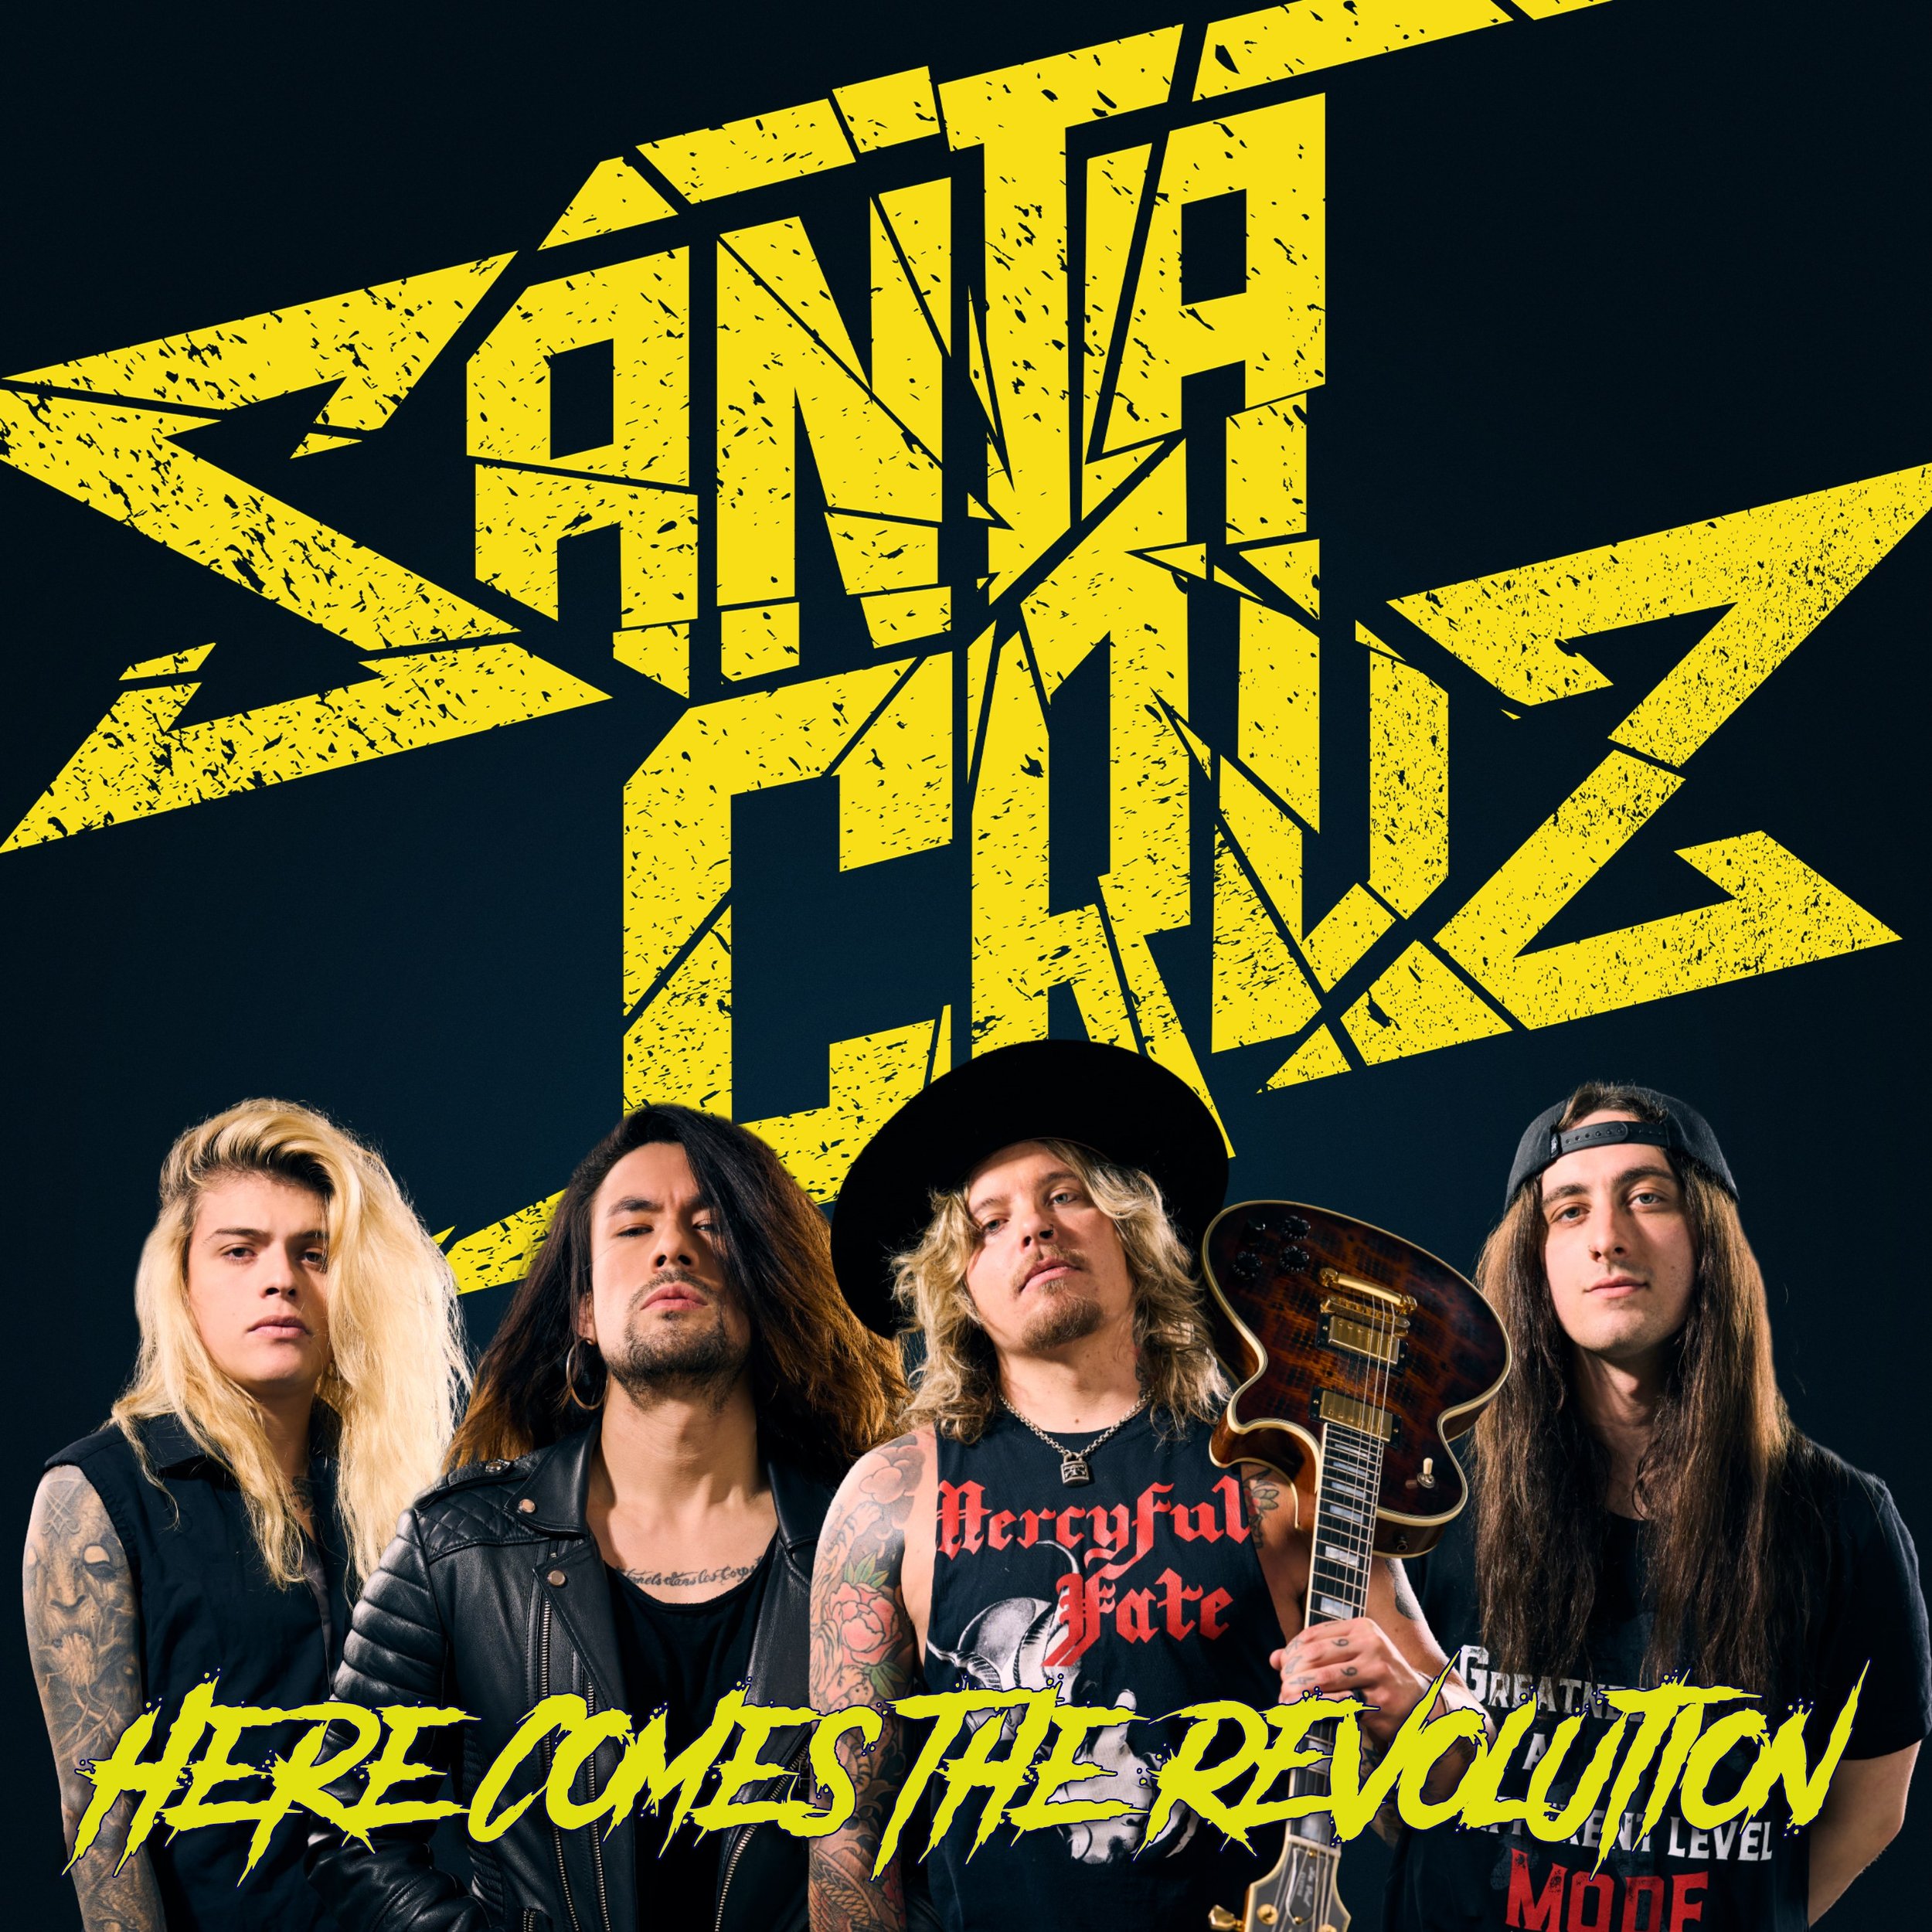 Santa+Cruz+Here+Comes+The+Revolution+single+cover.jpg